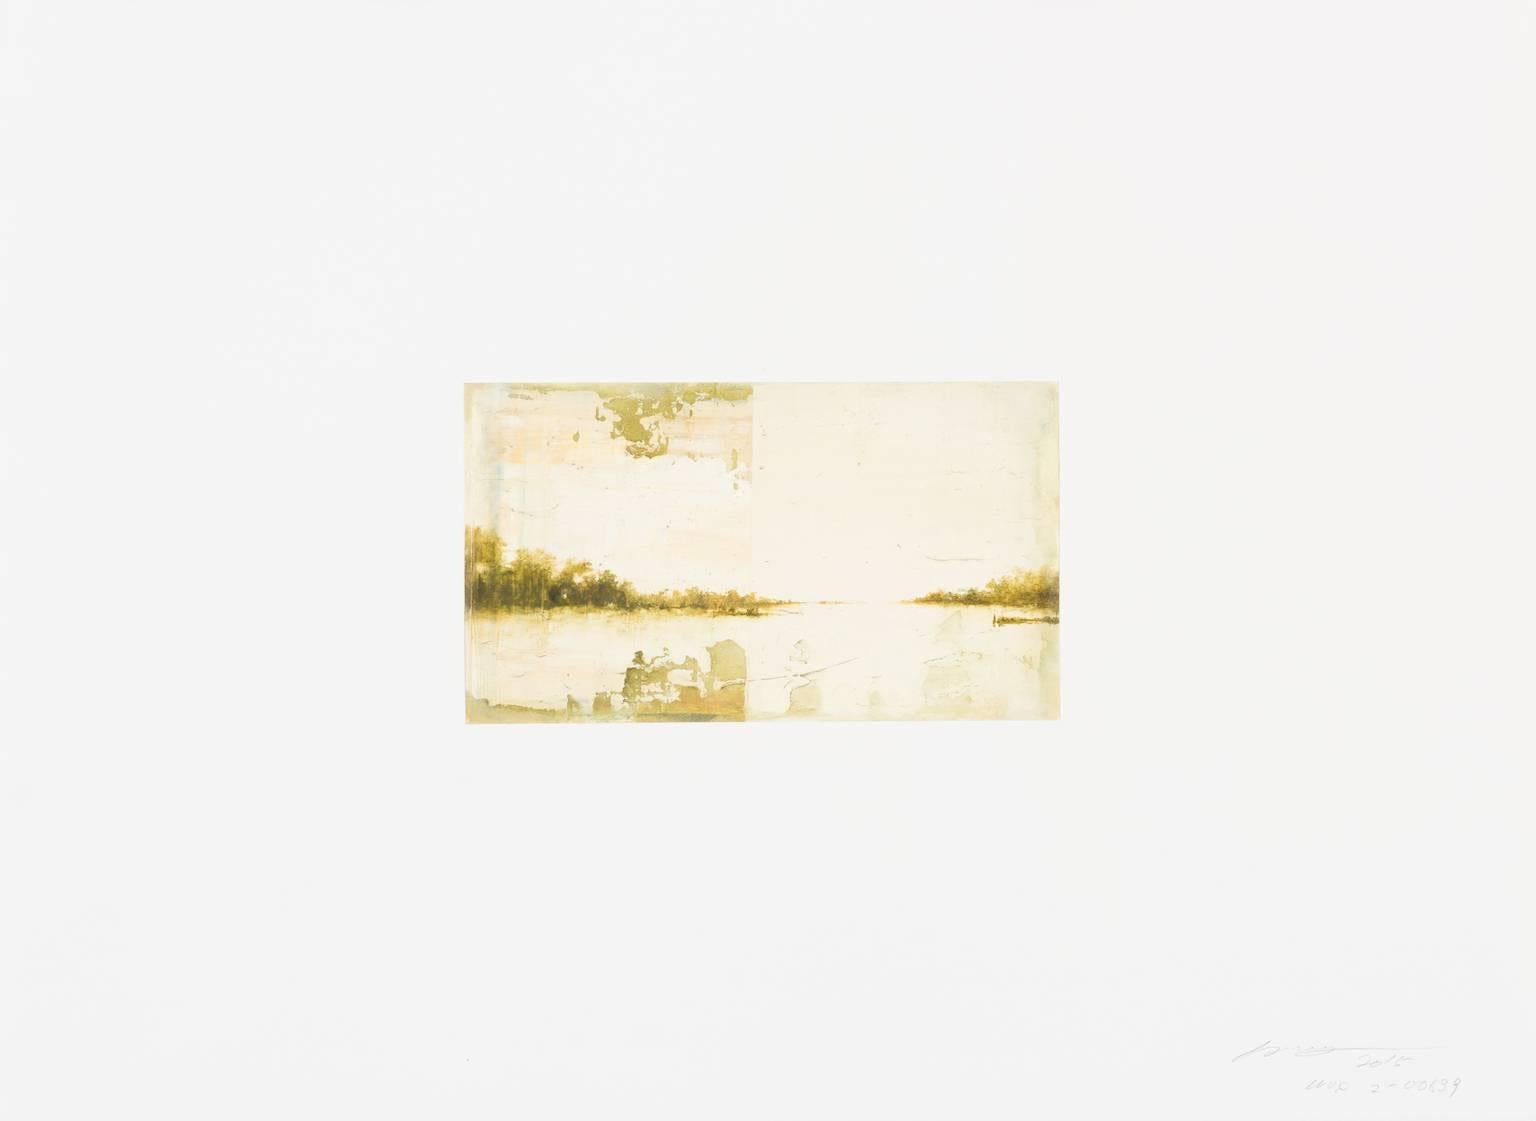 Hiro Yokose Abstract Painting - WOP 2 - 00639